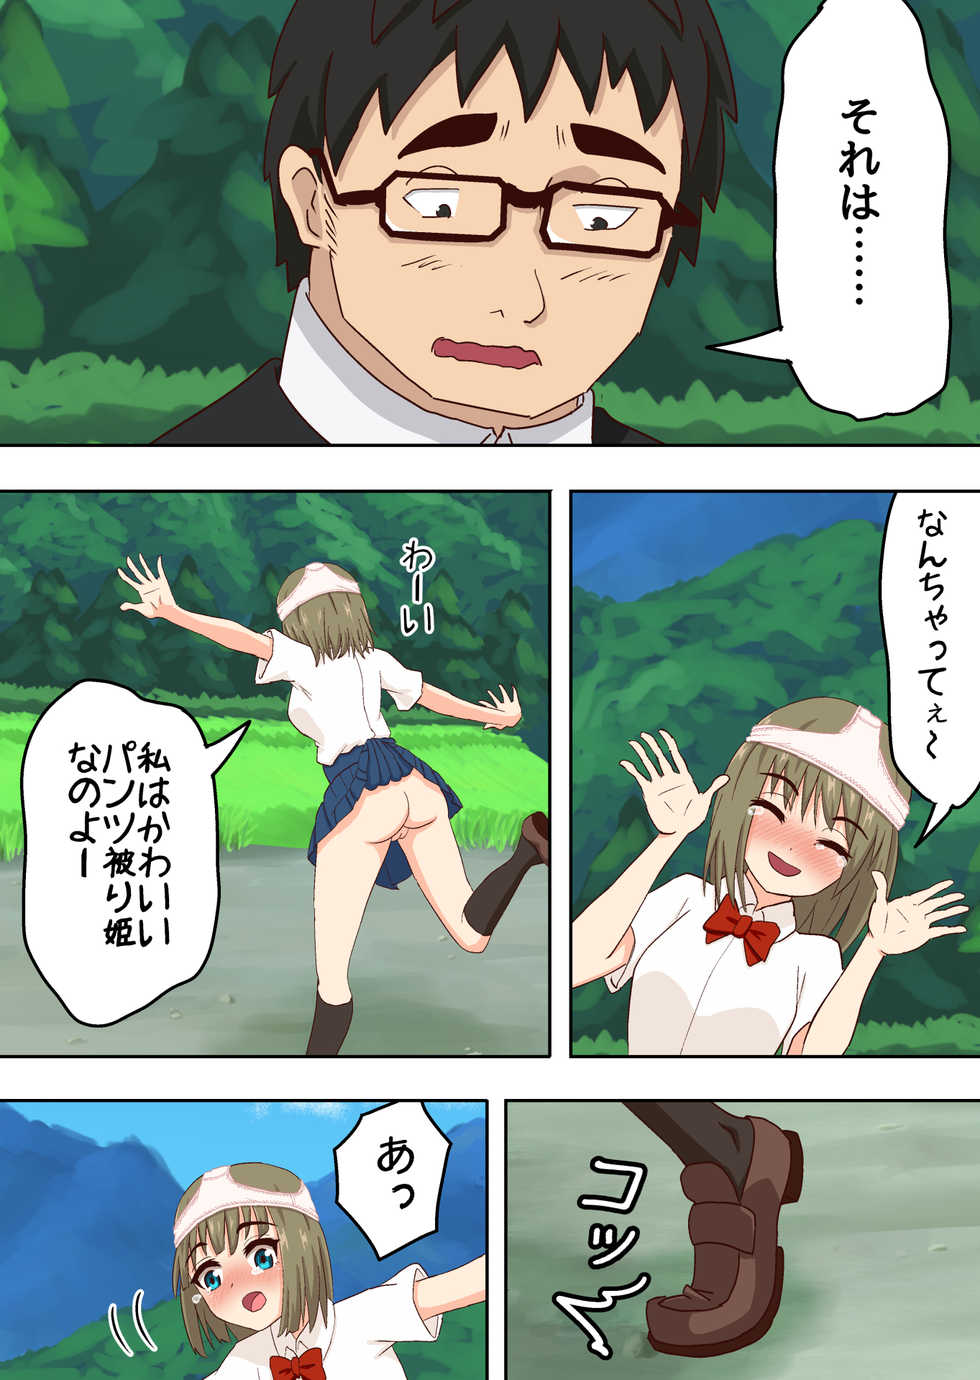 [Takahashi] Bus Stop Bullying. - Page 16